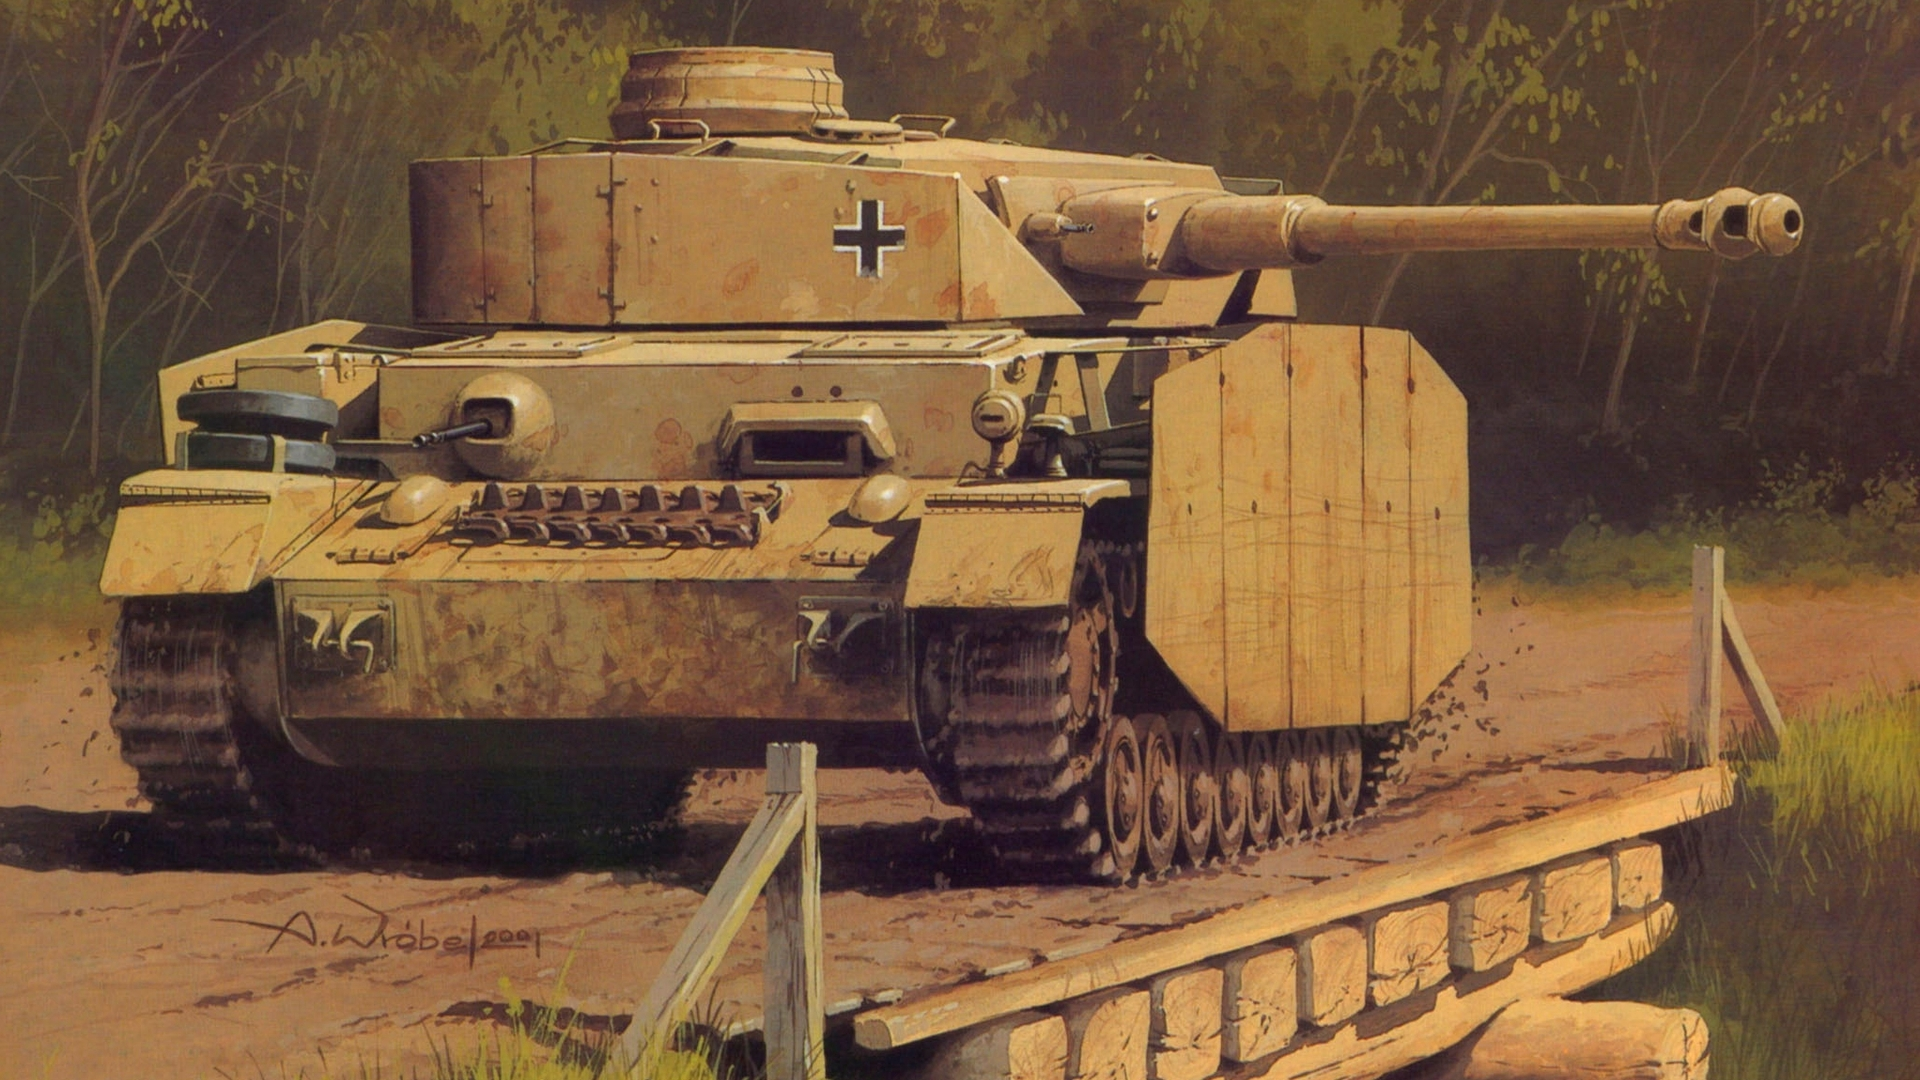 General 1920x1080 Panzer IV World War II digital art tank military watermarked artwork military vehicle signature frontal view